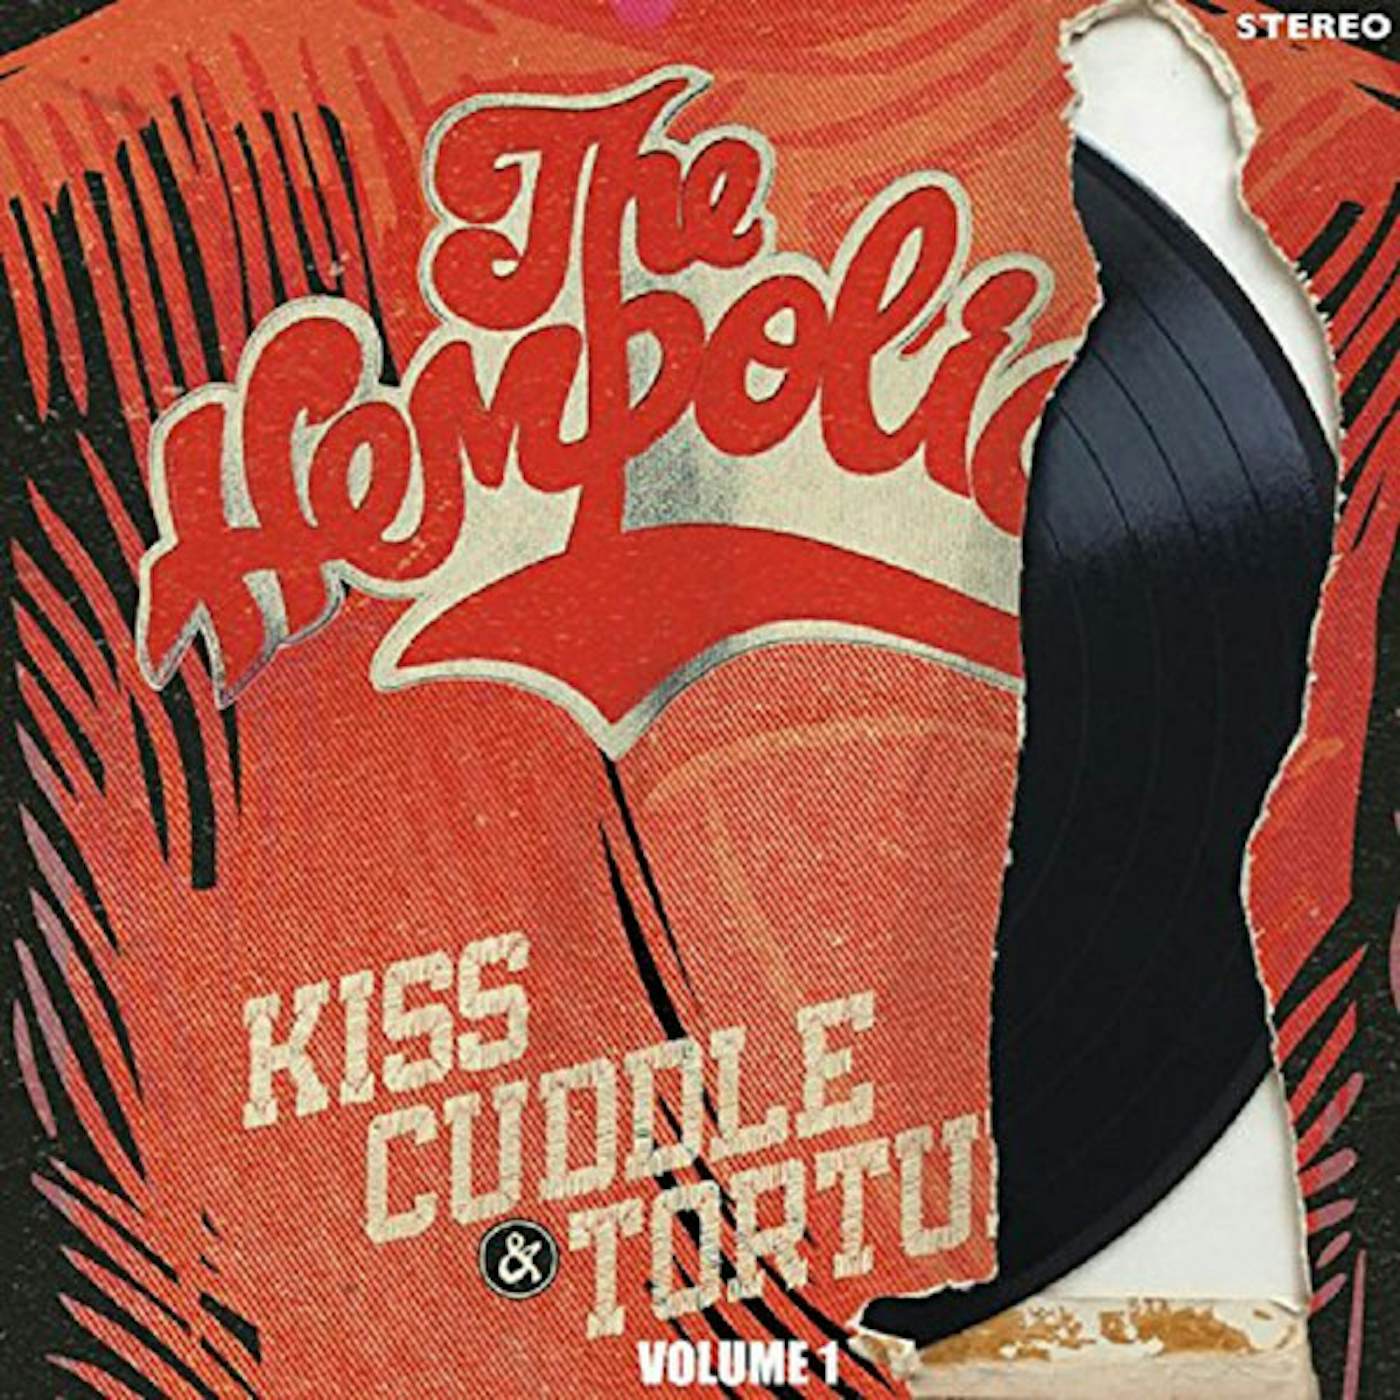 The Hempolics Kiss Cuddle & Torture Vol. 1 Vinyl Record